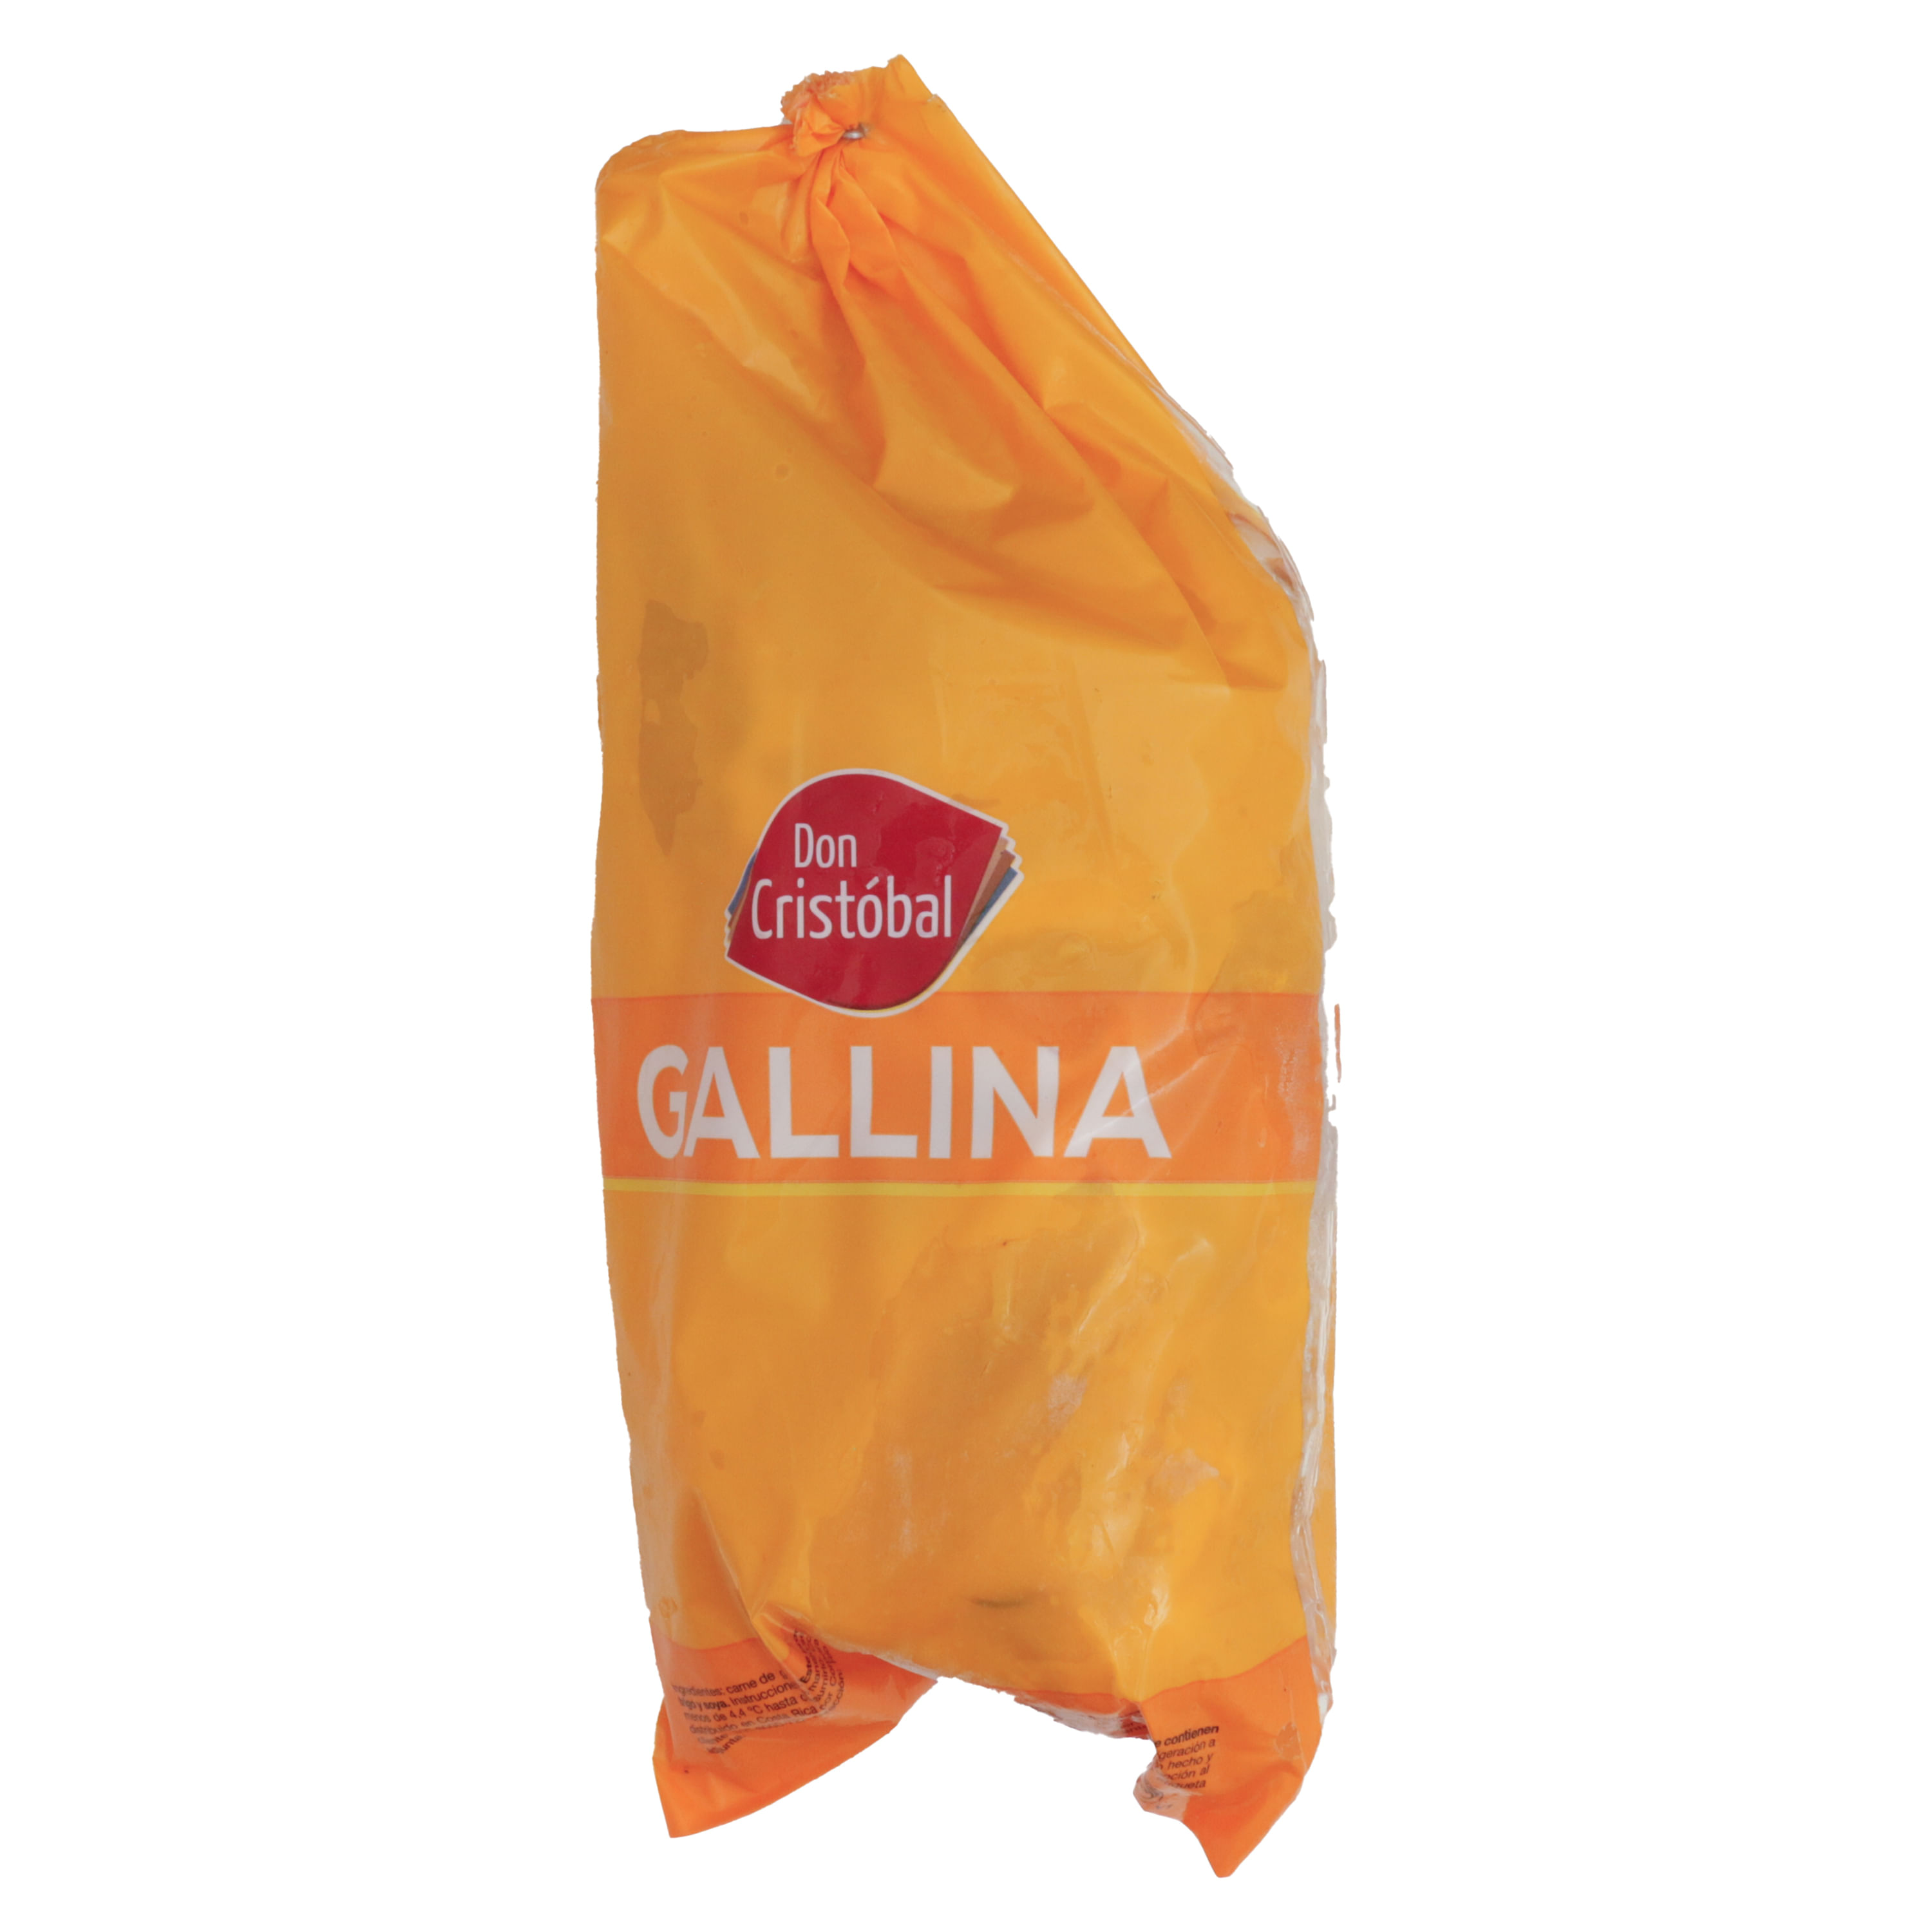 Gallina-Entera-Don-Cristobal-Peque-a-Empacada-Precio-indicado-por-Kilo-Gallina-Entera-Peque-a-Congelada-Kilo-1-64037